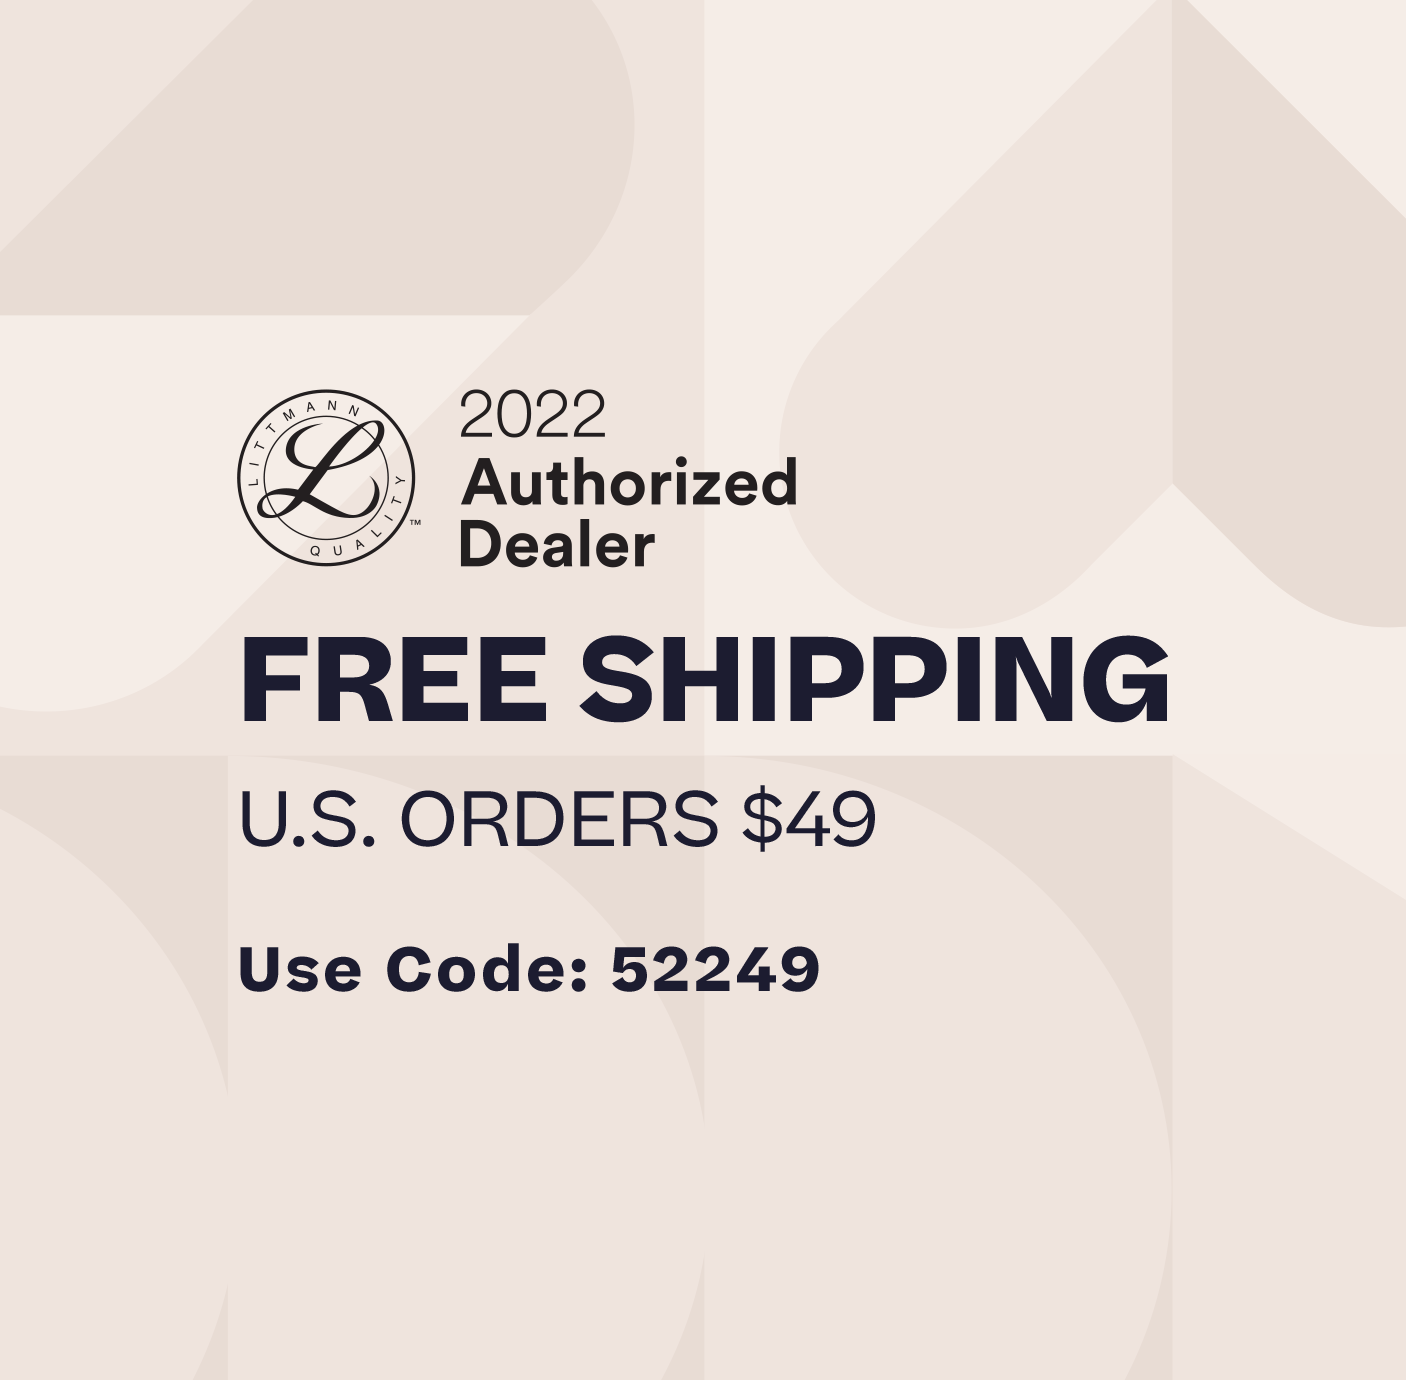 Free U.S. Shipping on Littmann Orders of $49+